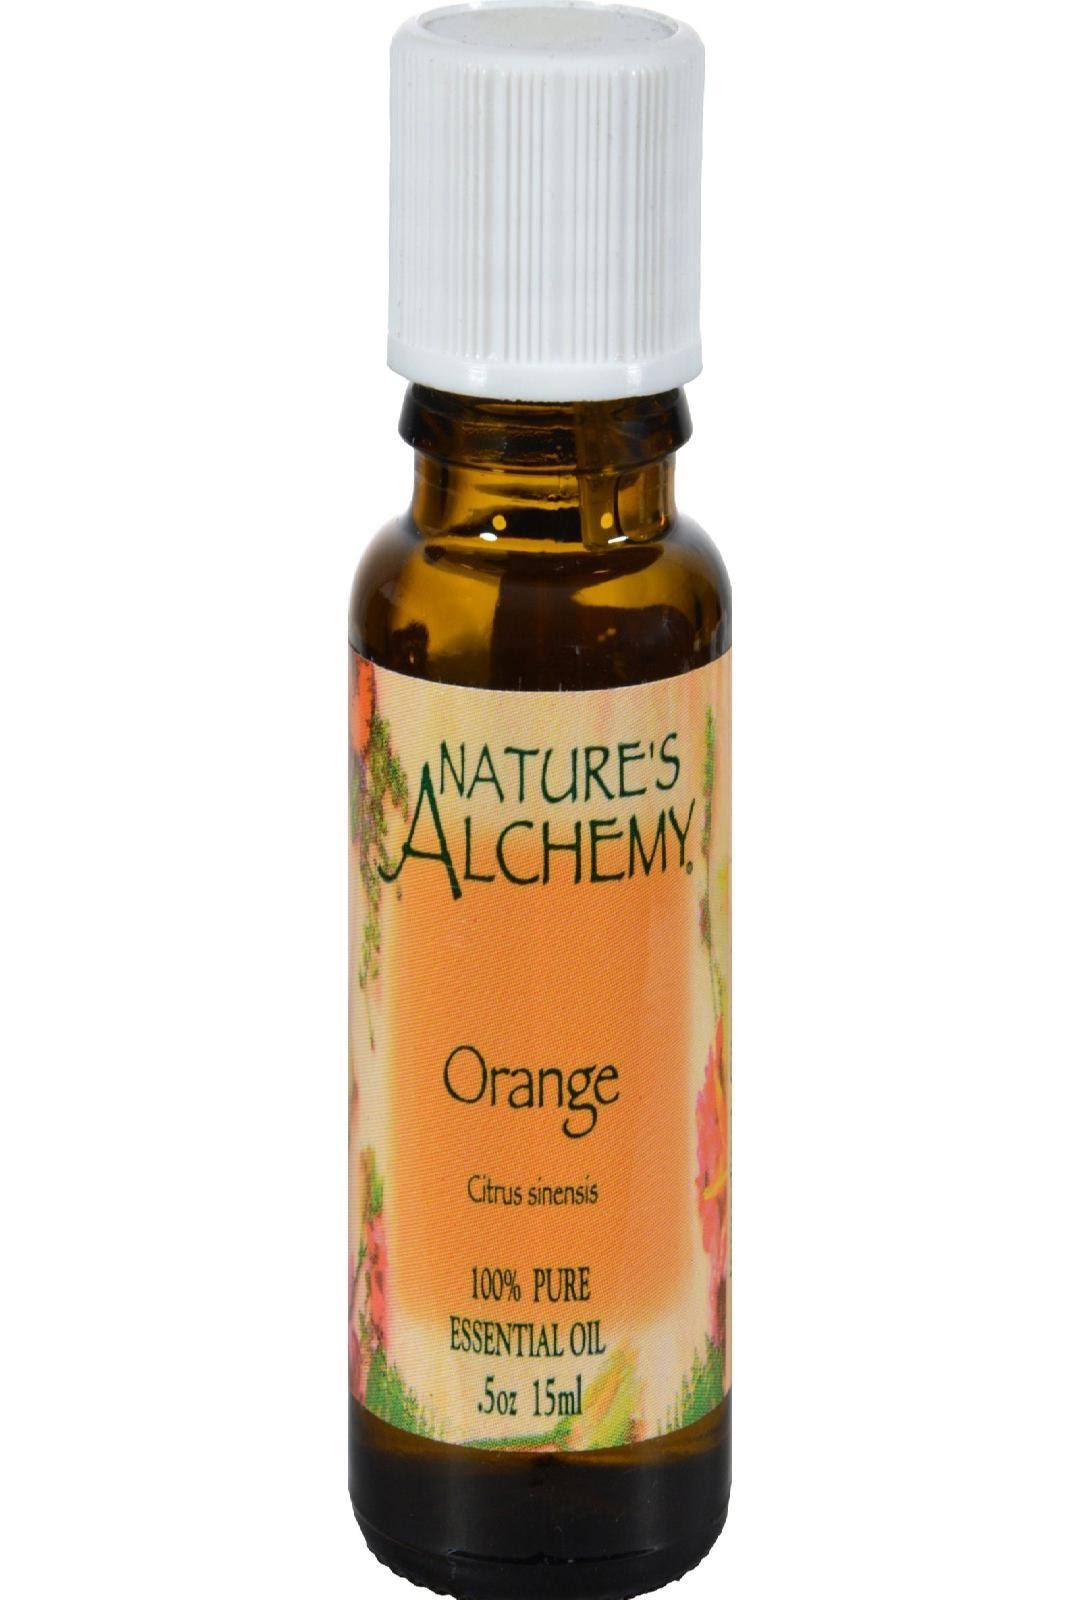 Natures Alchemy Essential Oil Orange, 0.5 FL oz